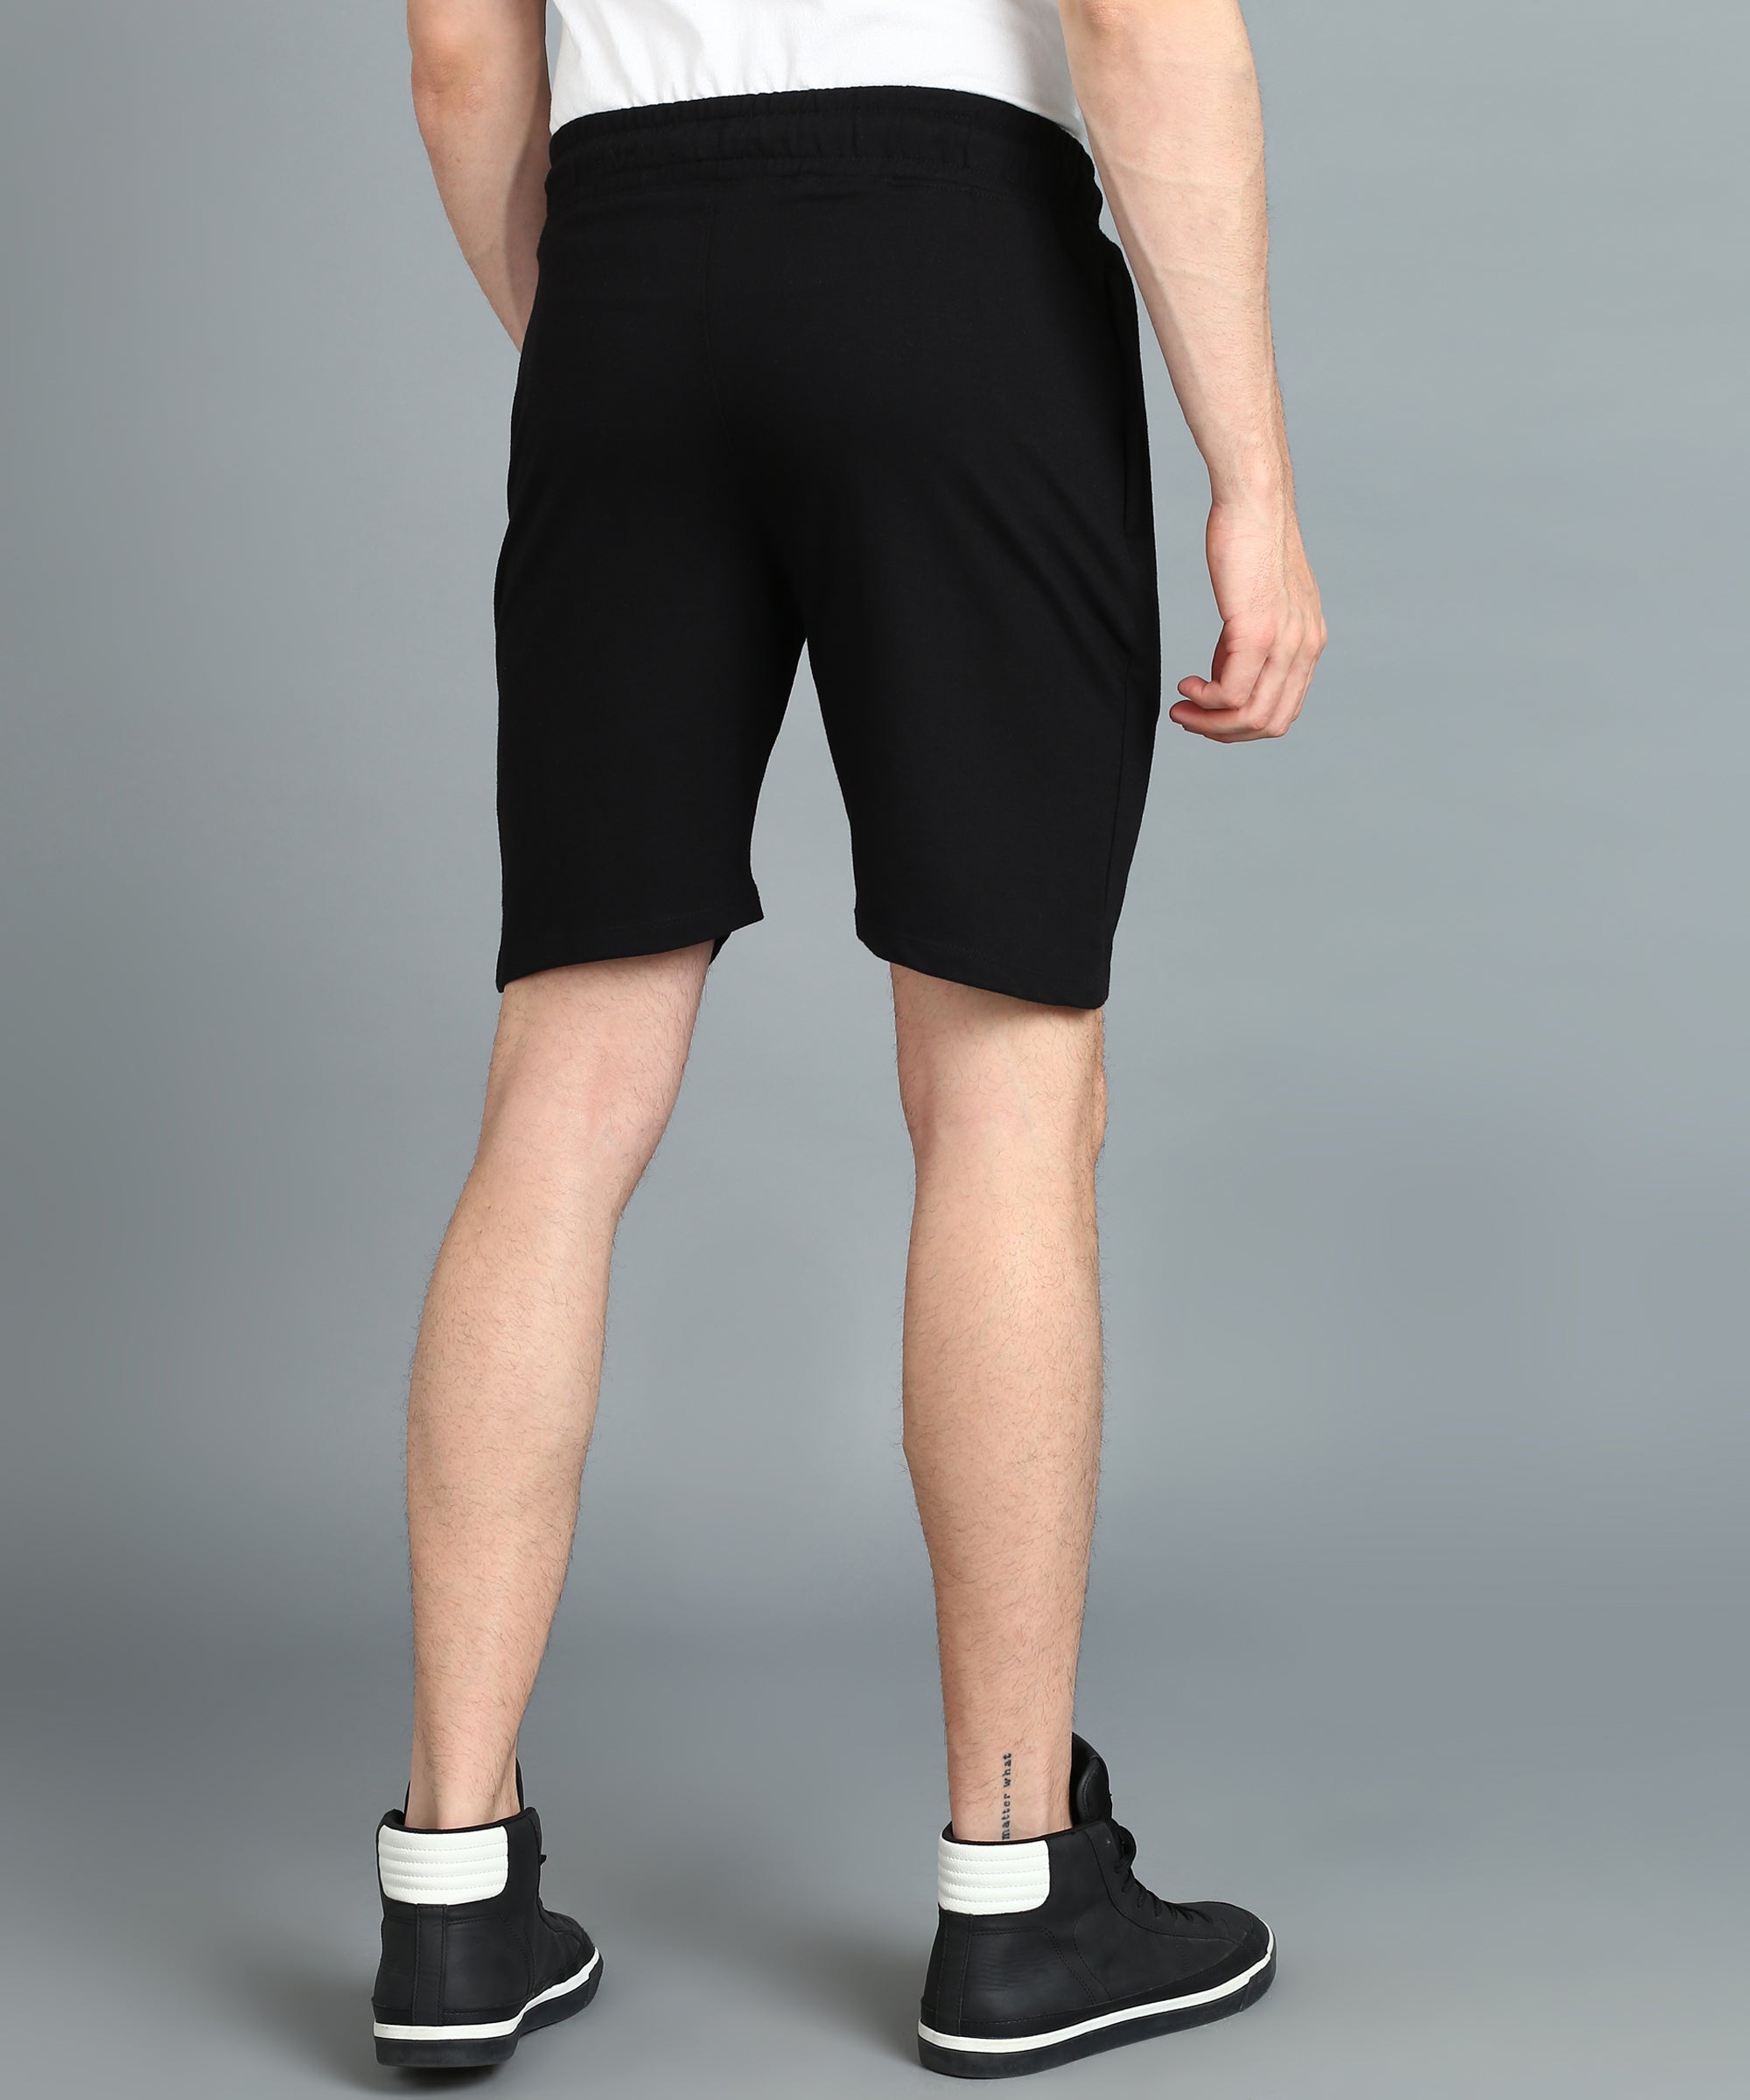 Urbano Fashion Men's Black Cotton Regular Shorts Stretchable